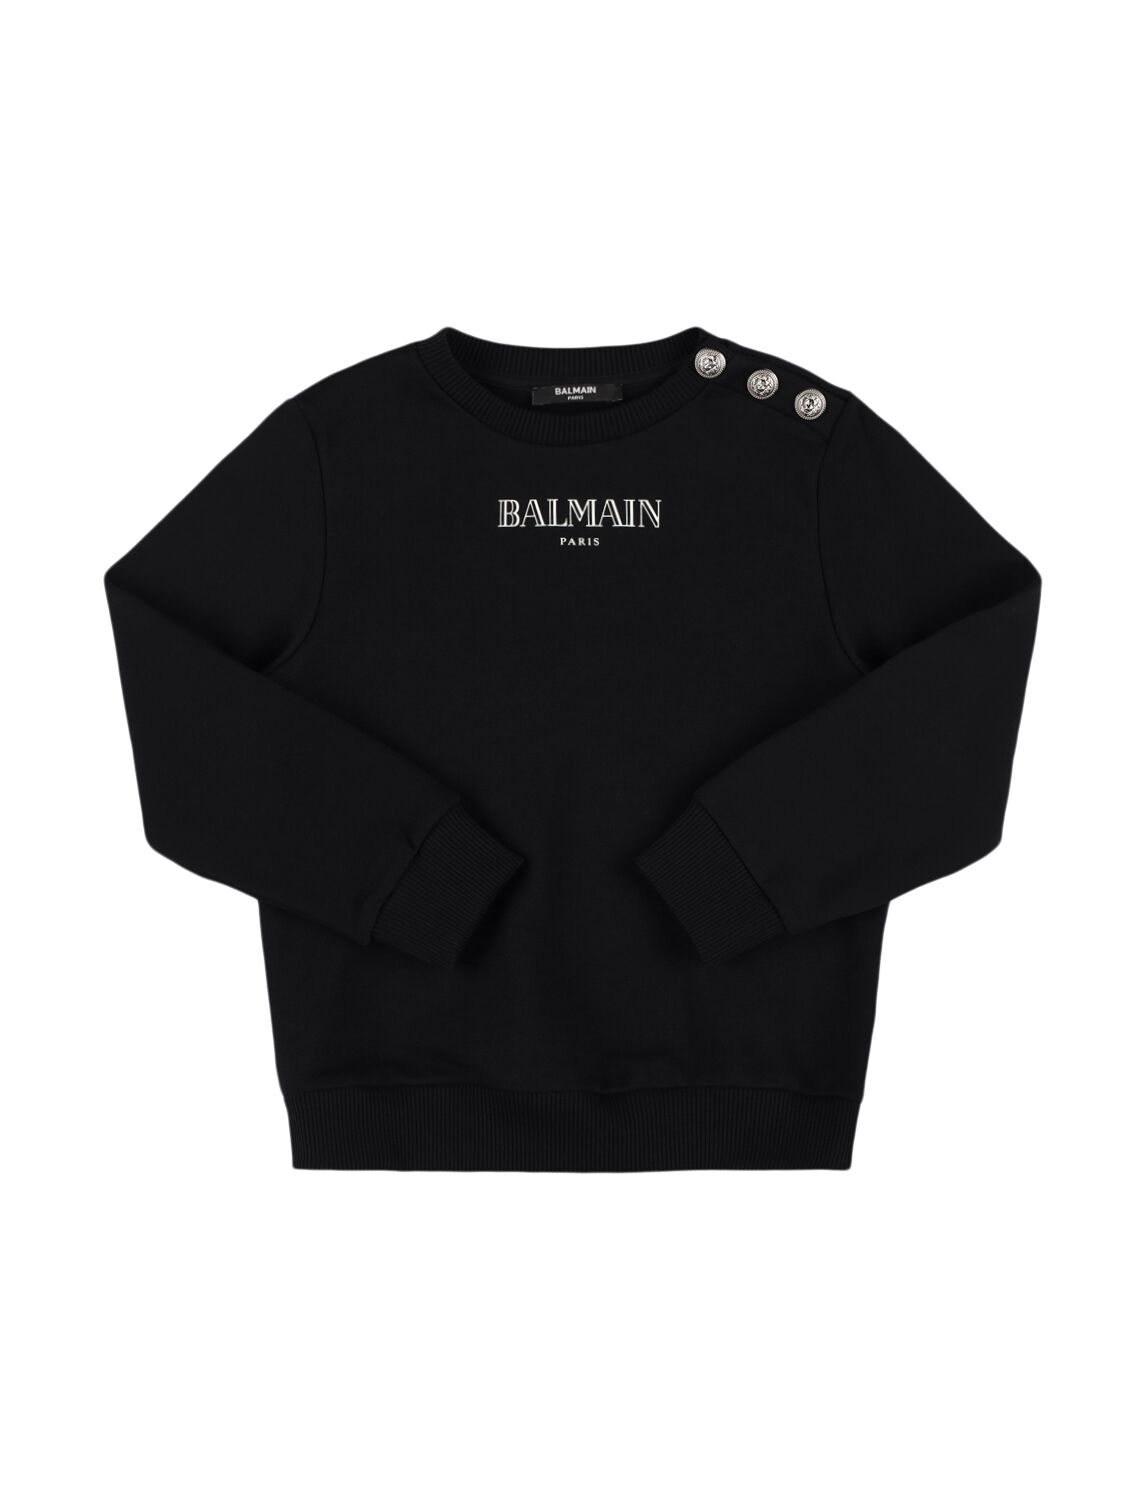 Balmain Printed Logo Cotton Crewneck Sweatshirt In Black